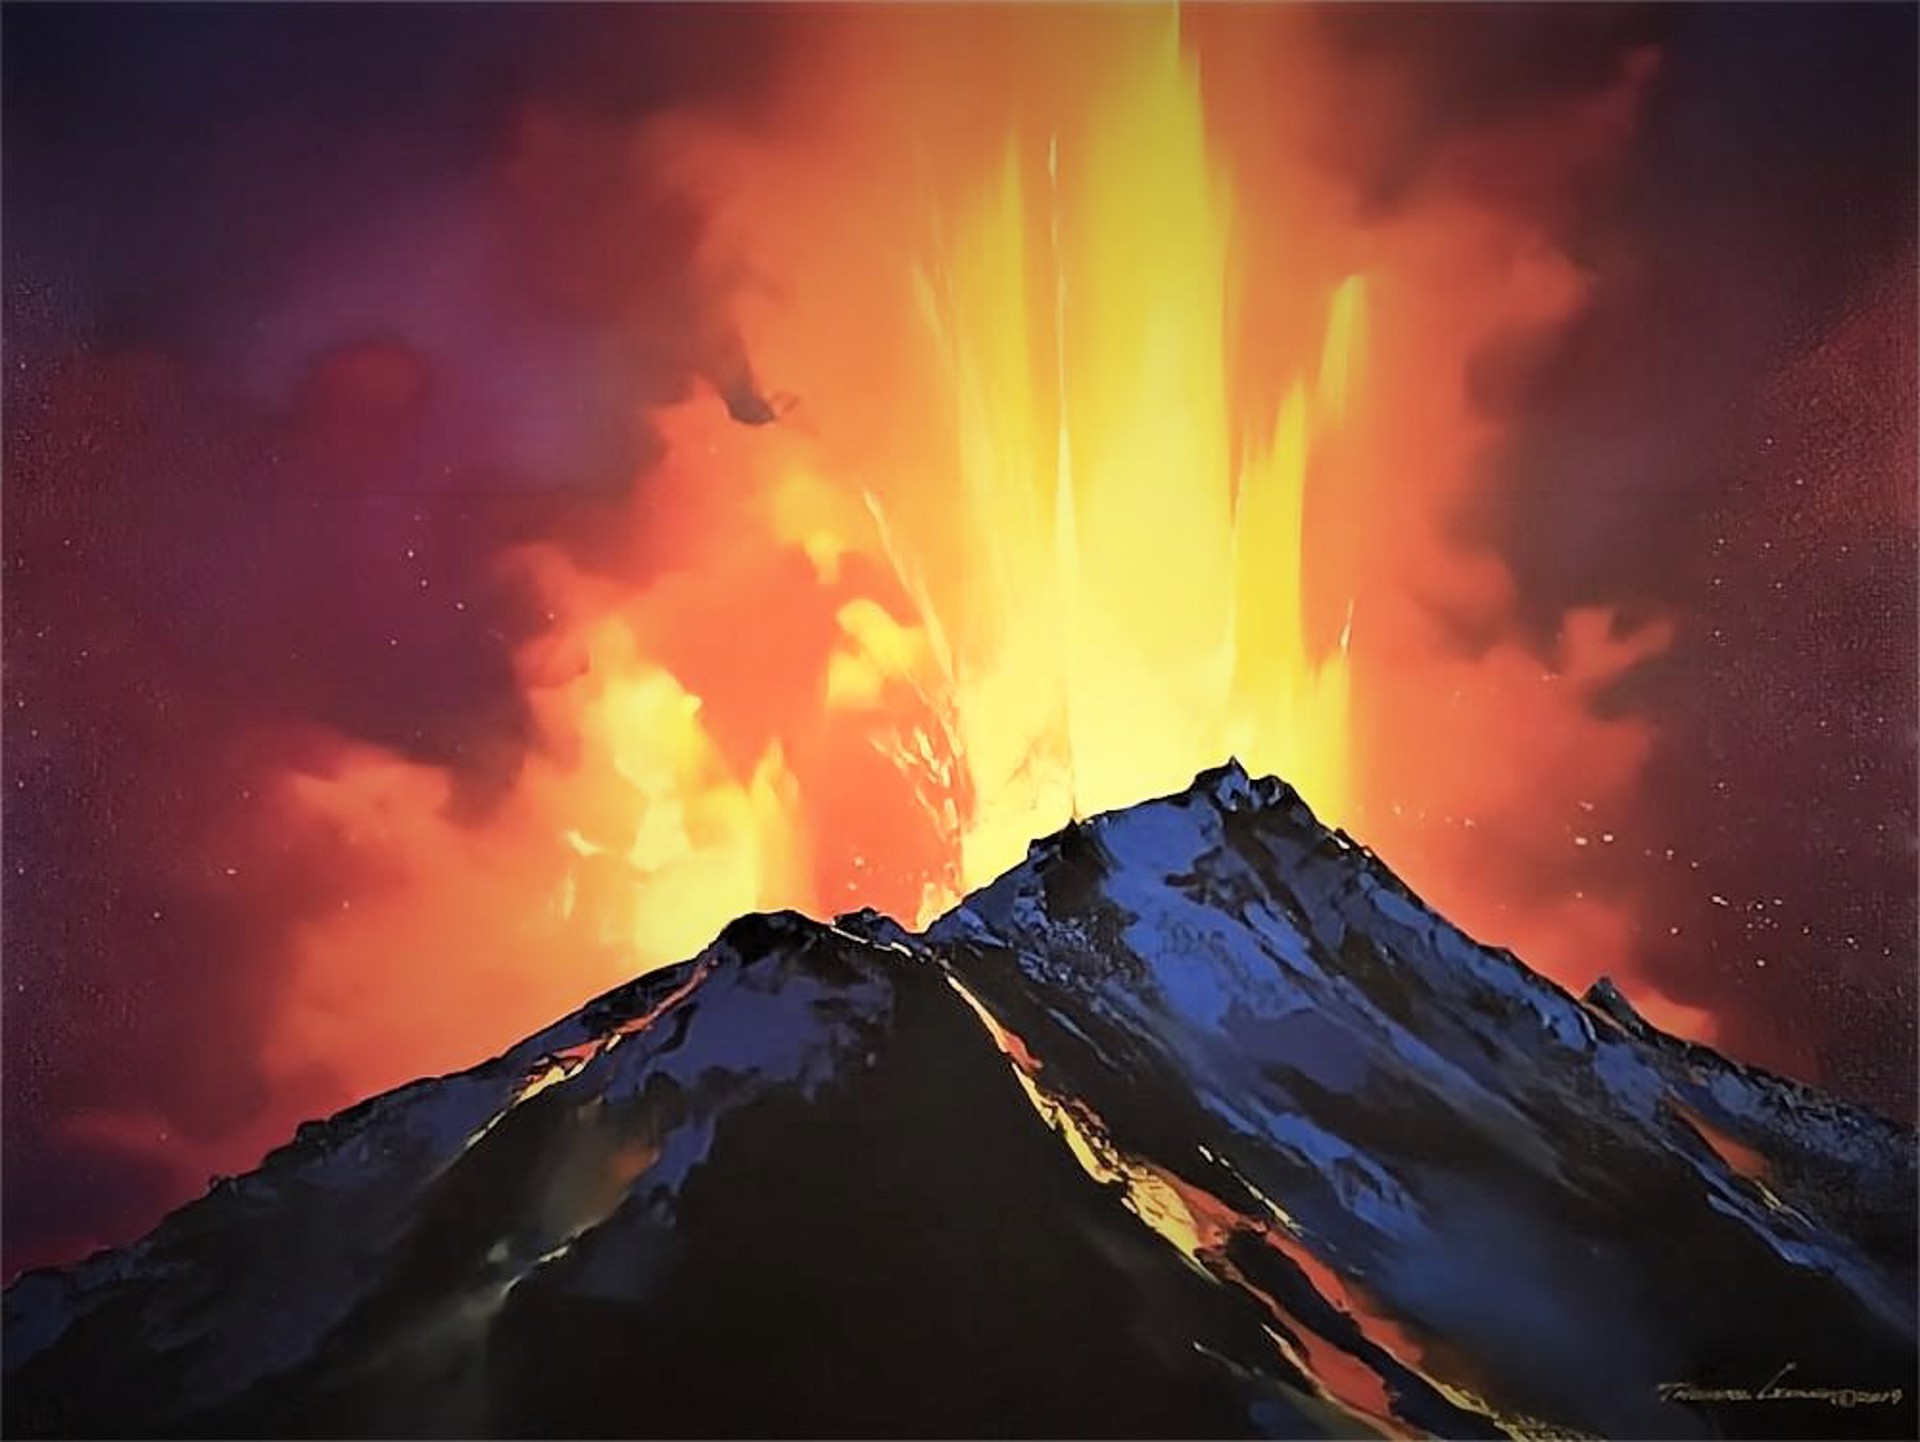 Volcanic Roar by Thomas Leung